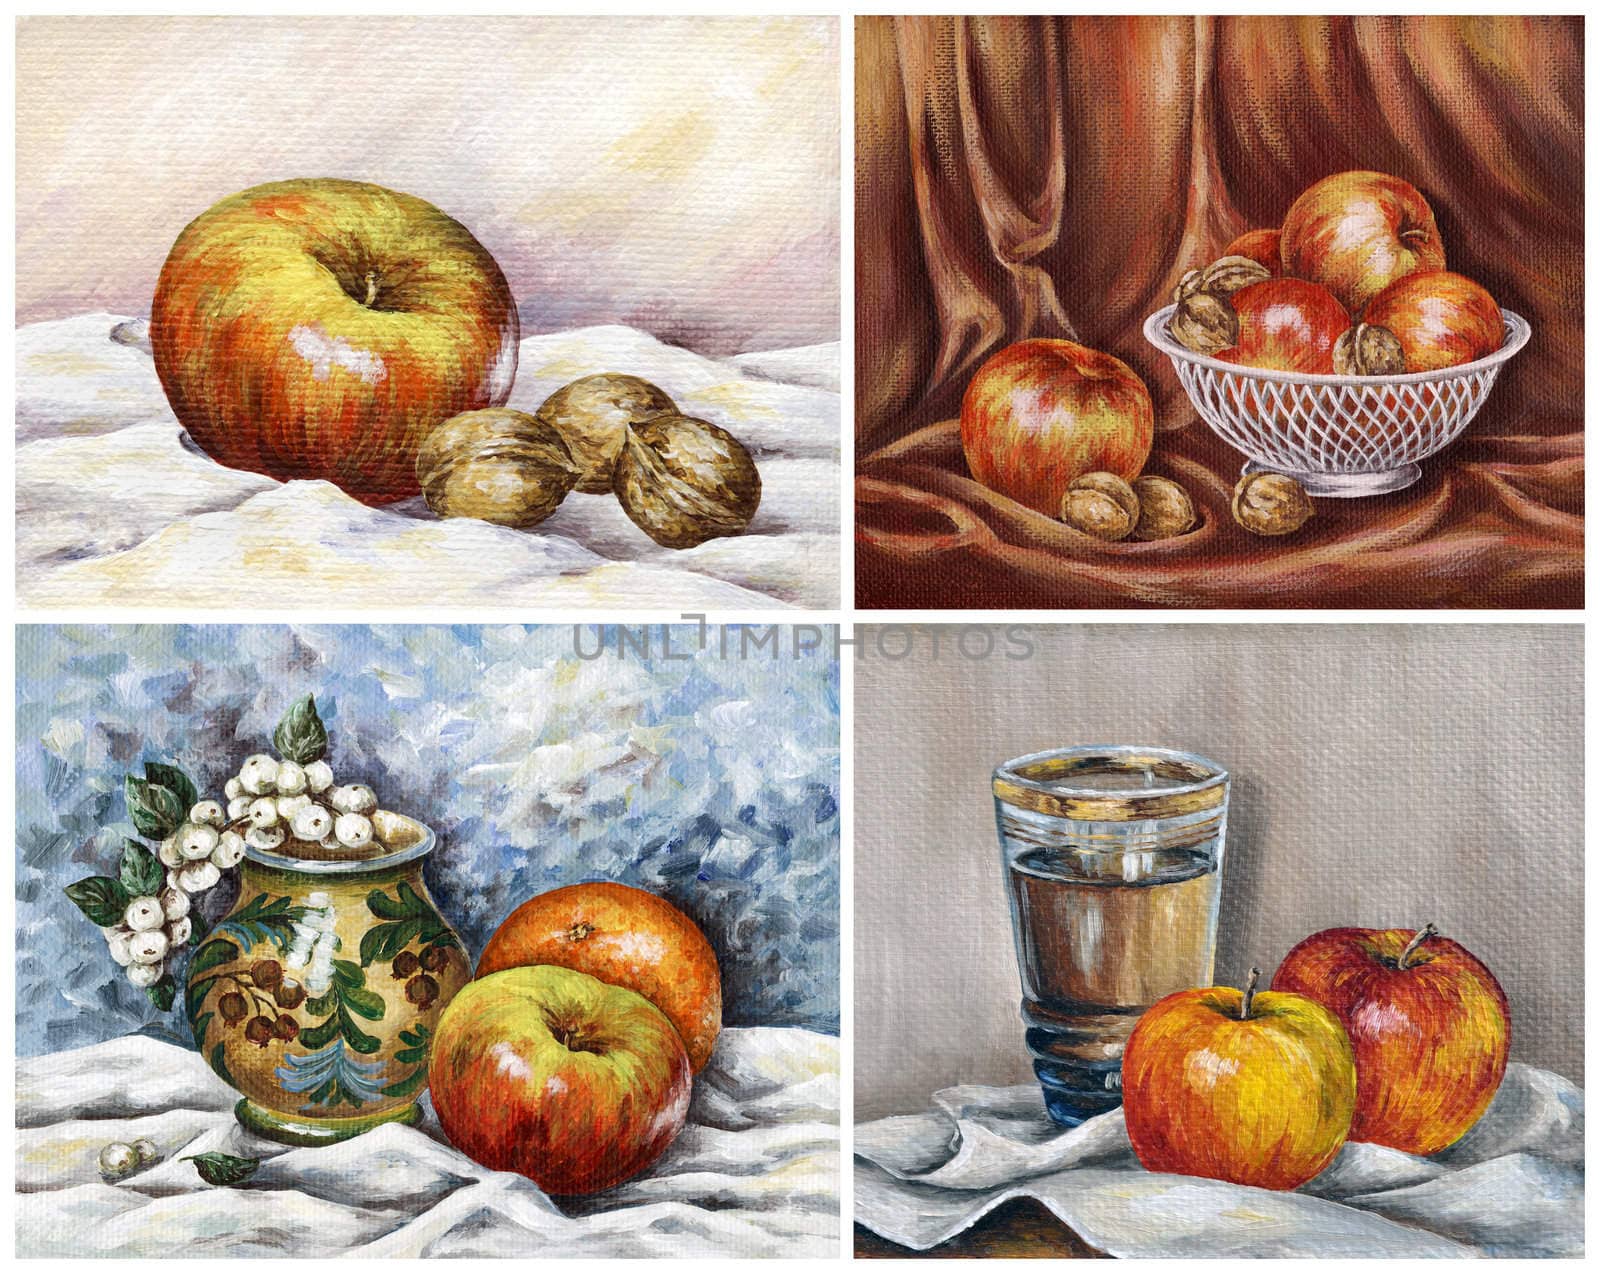 Food, fruit: apples, nuts, orange, juice. Picture oil paints on a canvas